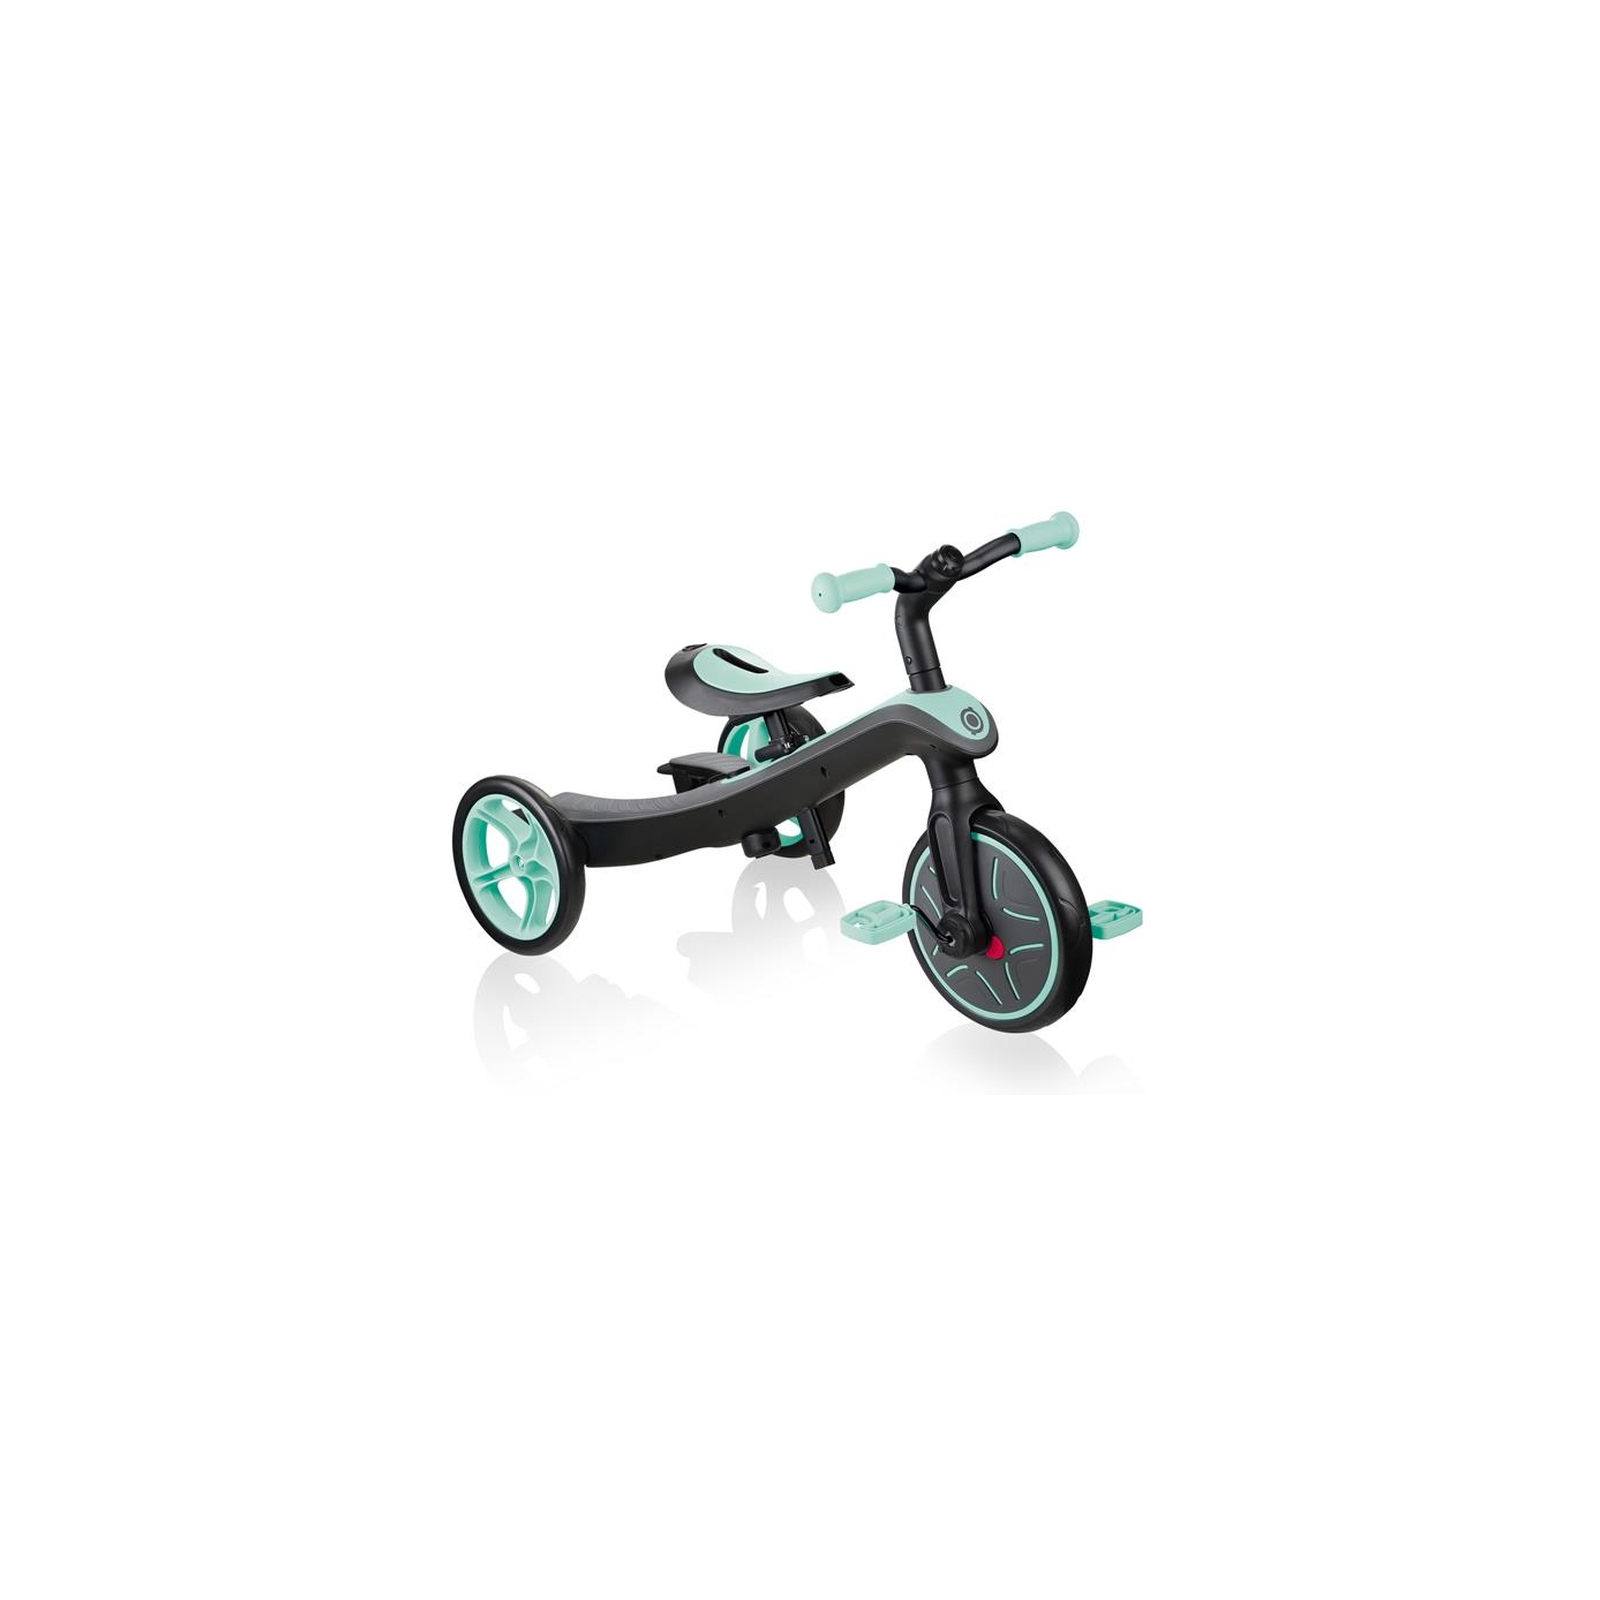 Дитячий велосипед Globber 4 в 1 Explorer Trike Teal Turquoise (632-105-3) зображення 5